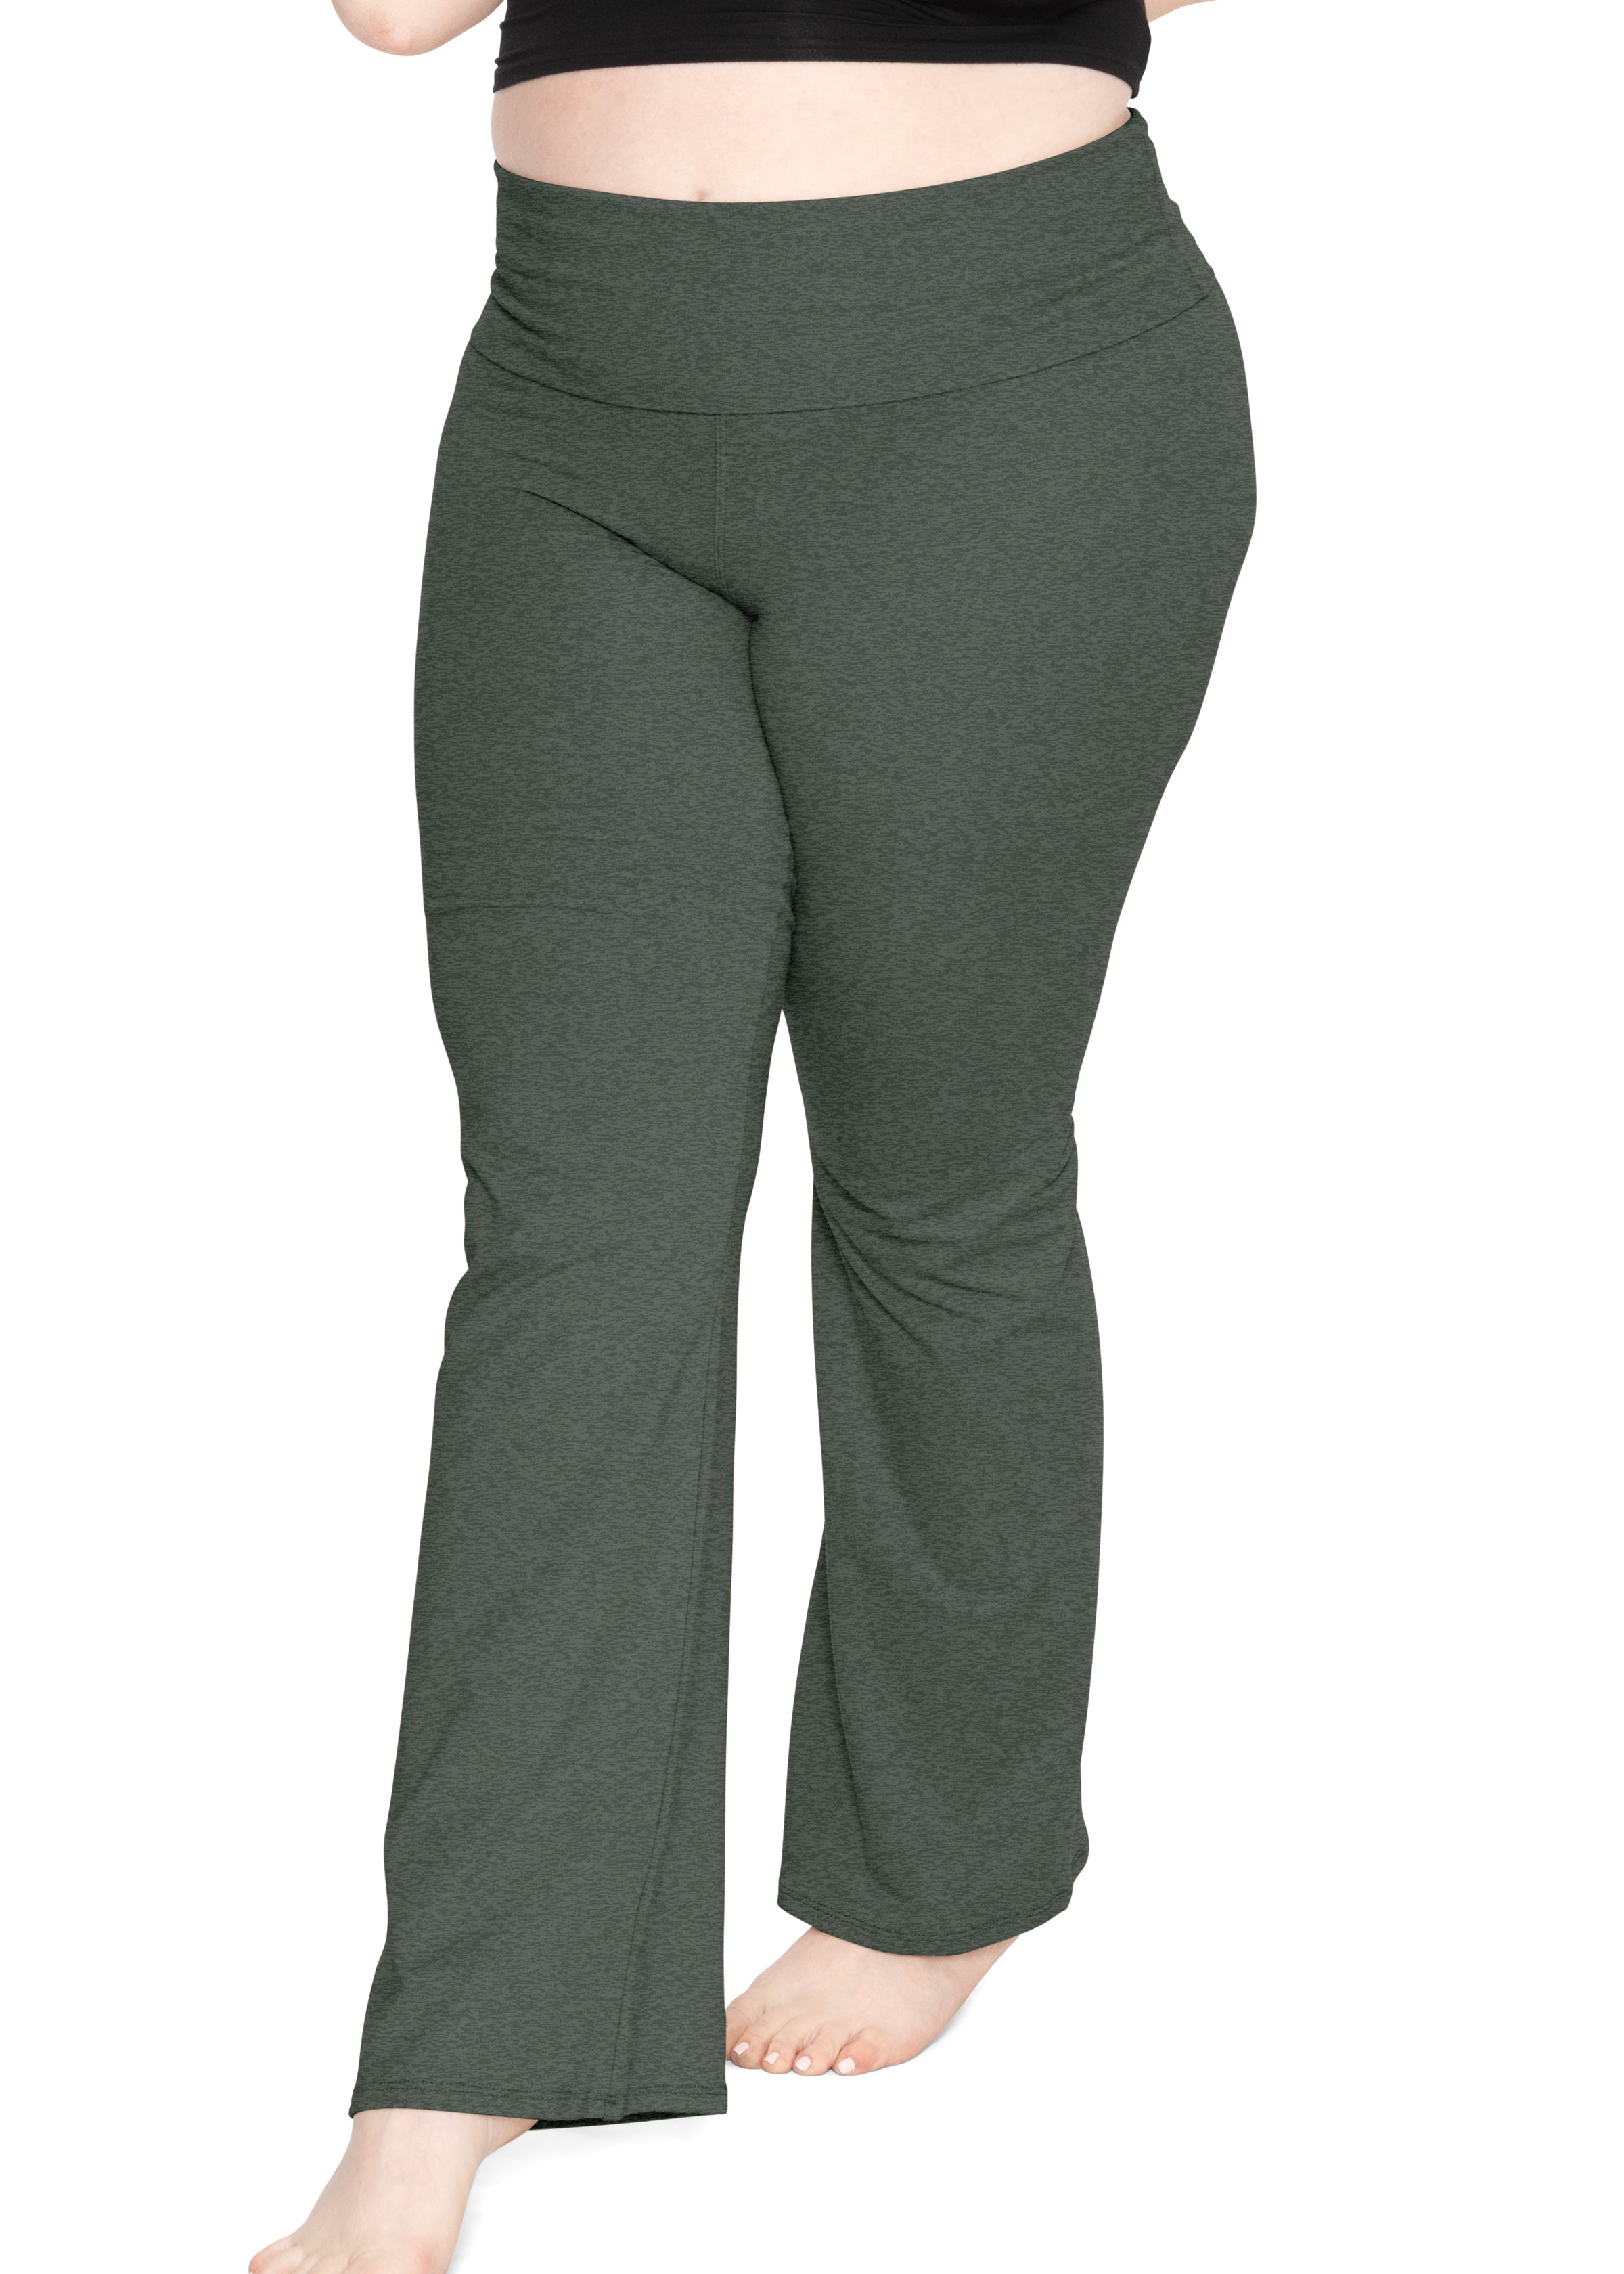 Gibobby Yoga Pants Cargo Pants Women plus Size Cotton Yoga Pants Leggings  Pants Ruched Butt Workout Yoga High plus Size Yoga Pants with Pockets for